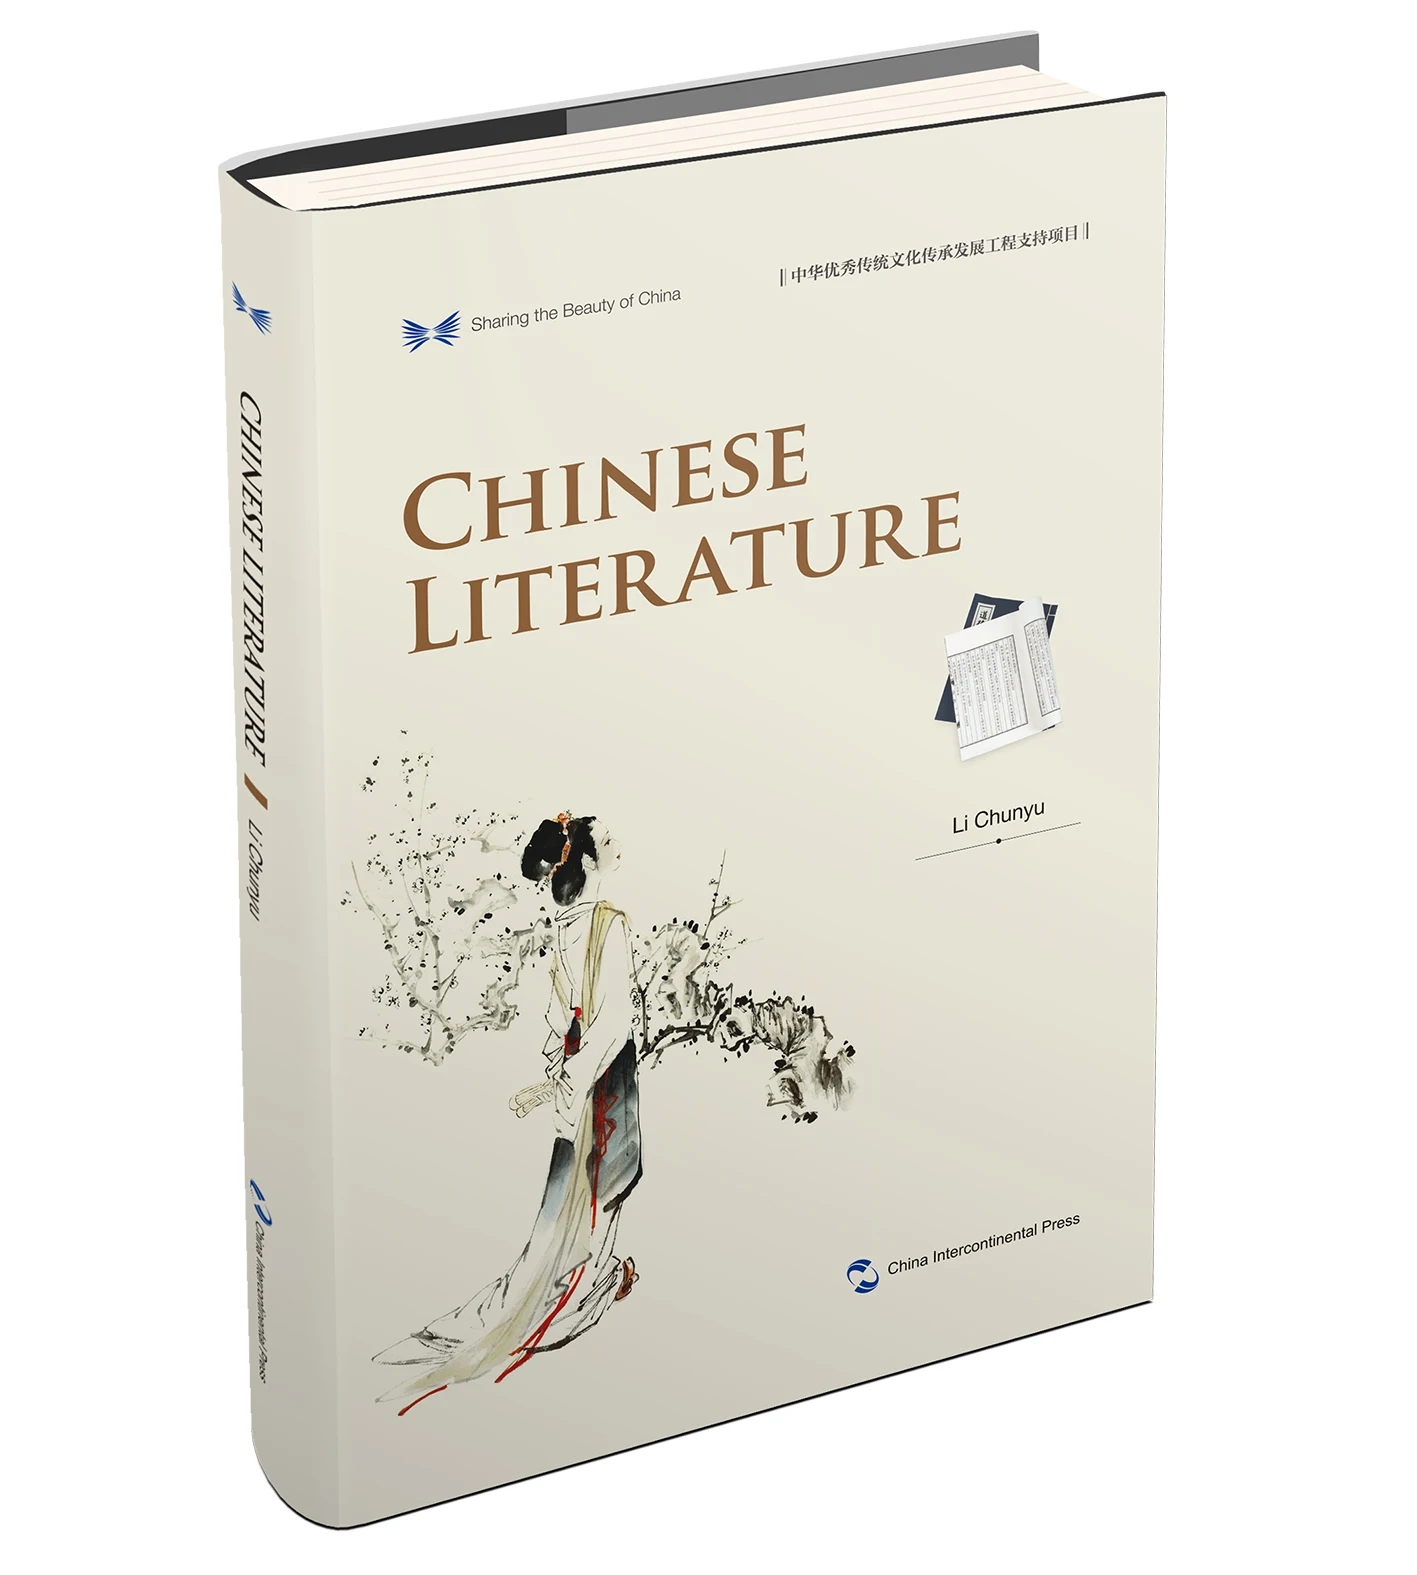 Sharing the Beauty of China: Chinese Literature